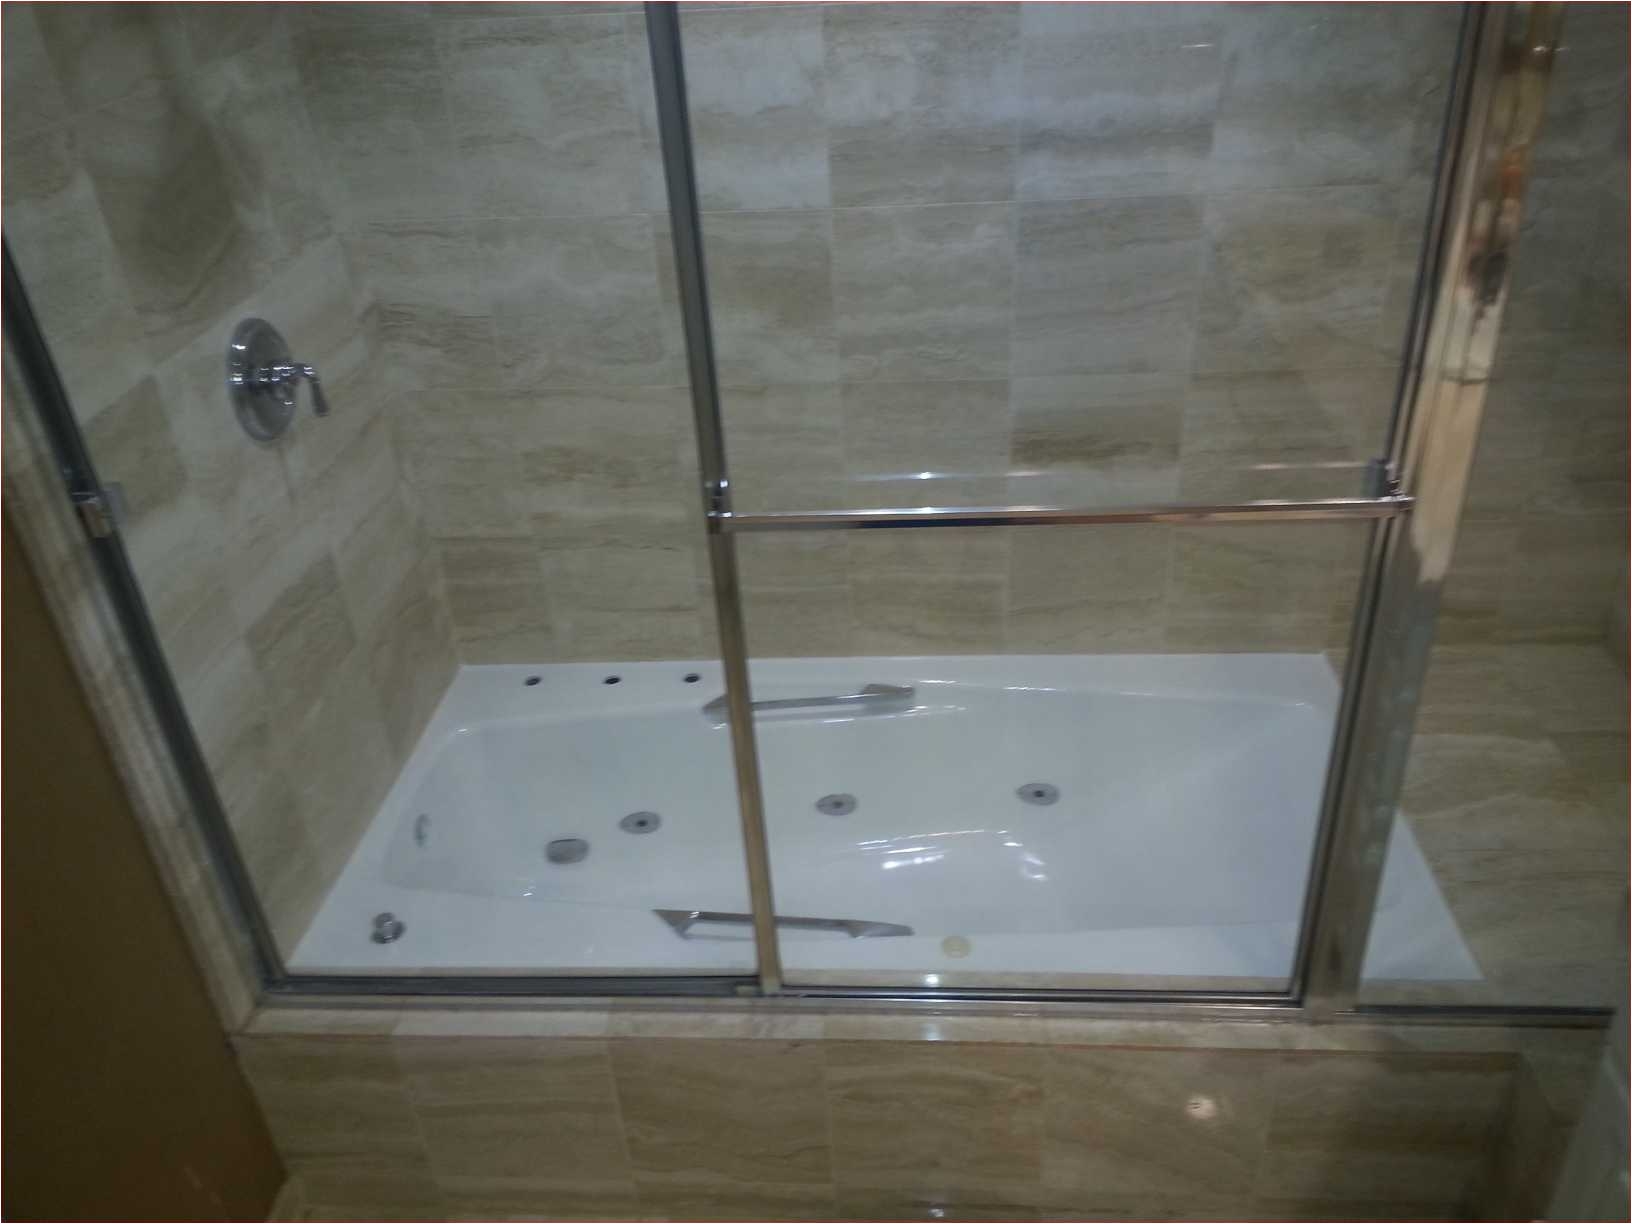 bathtub reglazing done professionally is a great economical